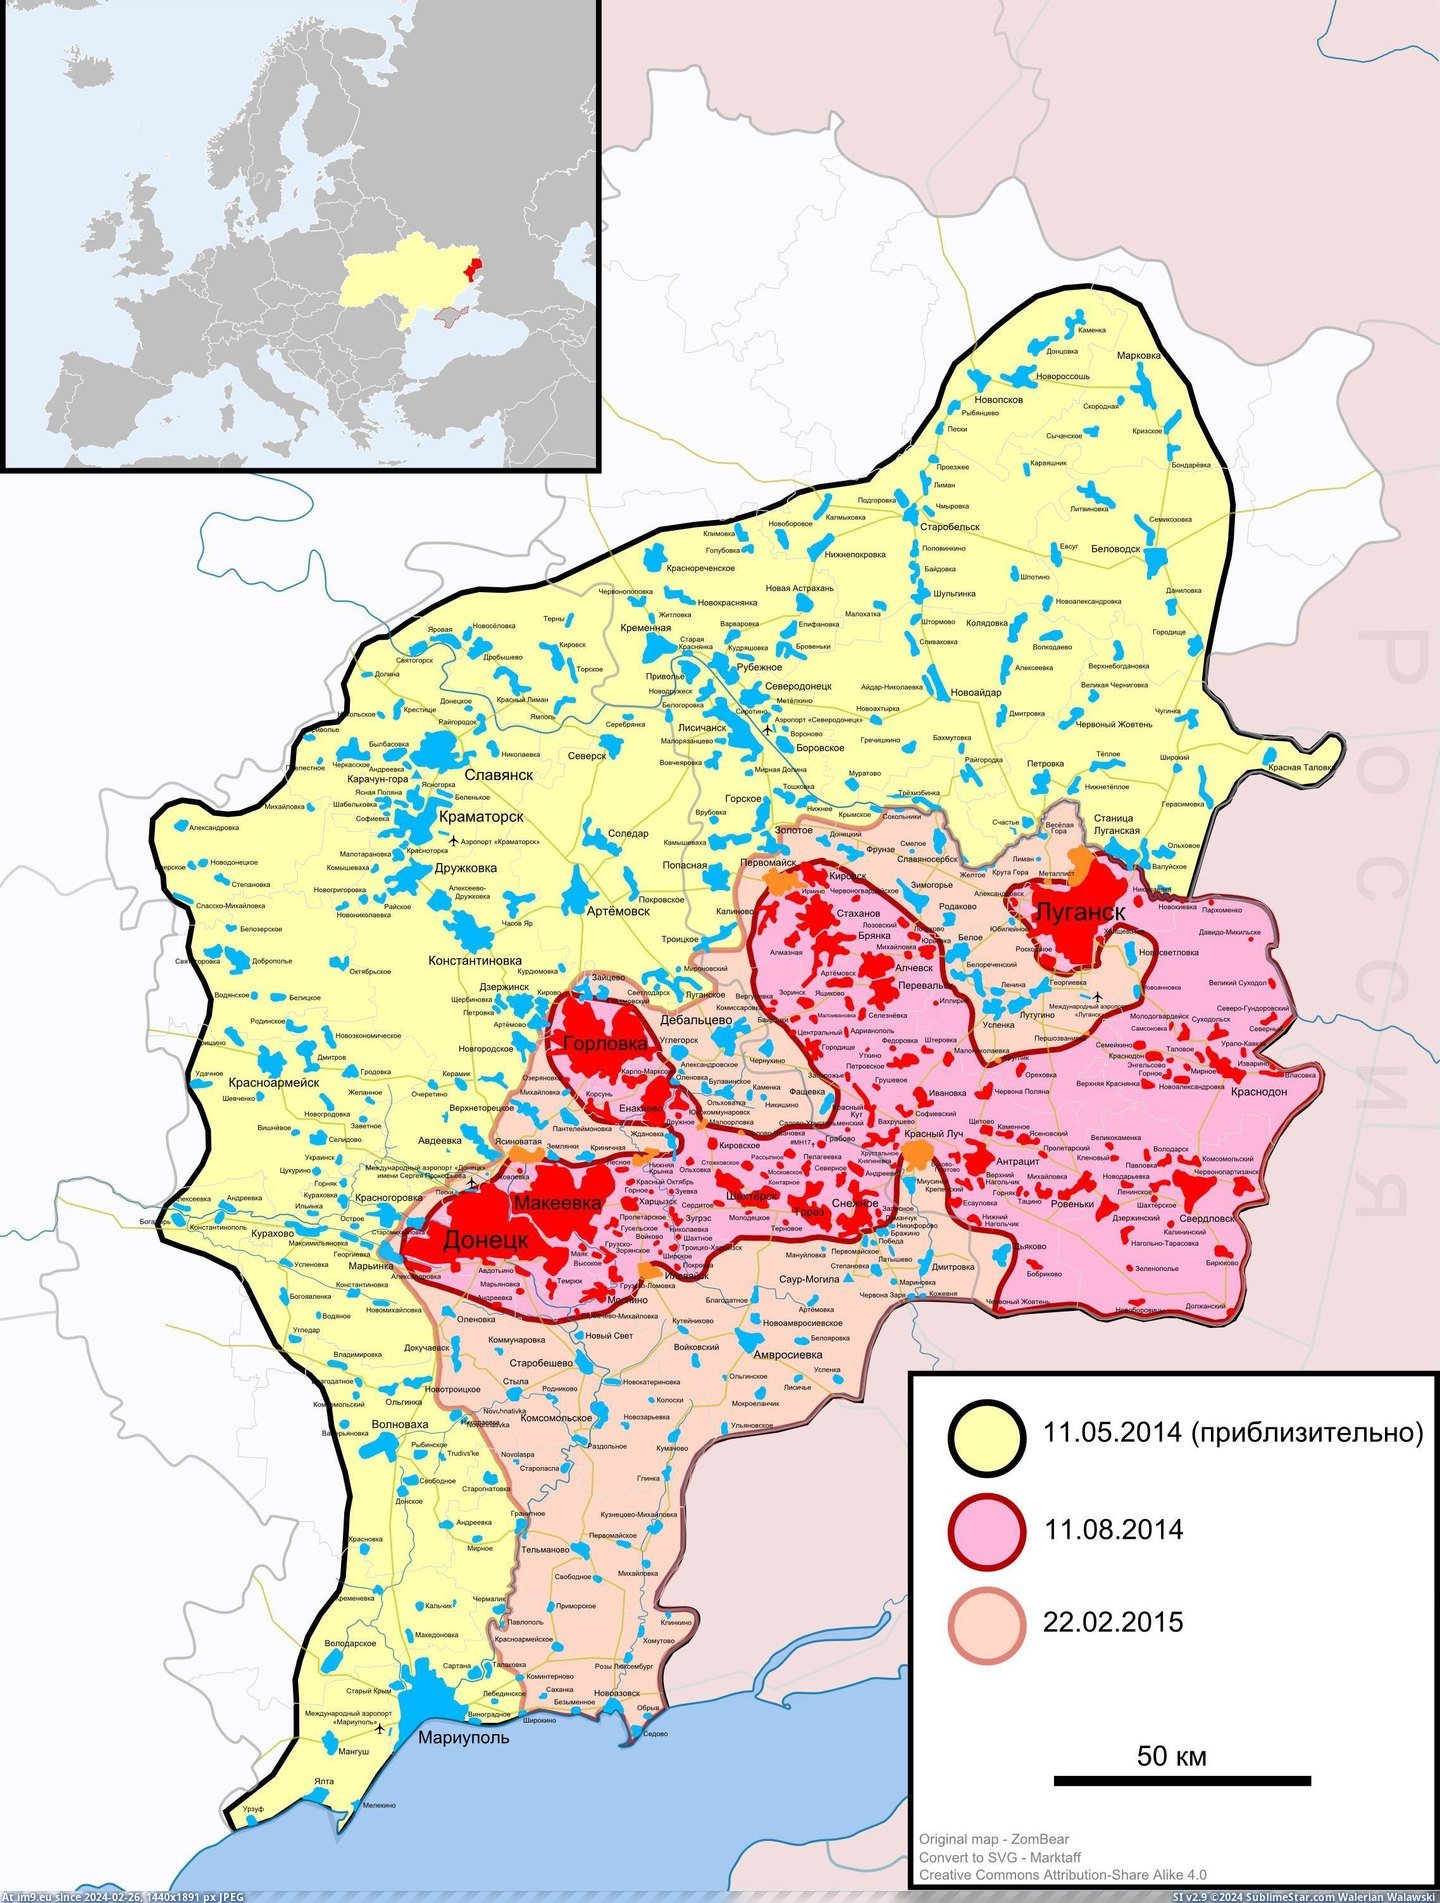 #Ukraine #East #Territorial #Rebel #Dates [Mapporn] East Ukraine rebel territorial losses and gains, with dates [2276x3001] Pic. (Image of album My r/MAPS favs))